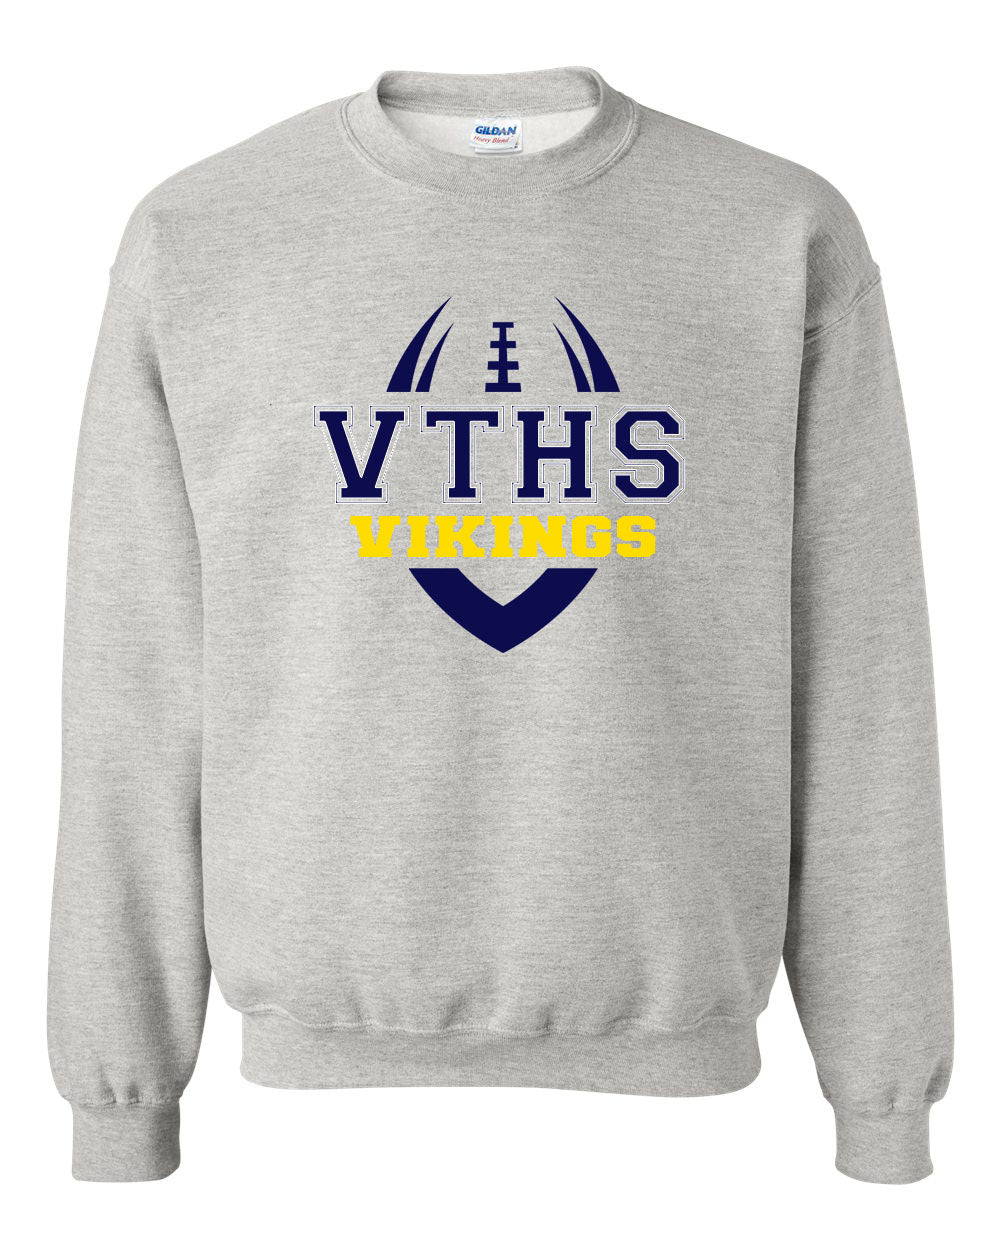 Vernon Football Design 1 non hooded sweatshirt